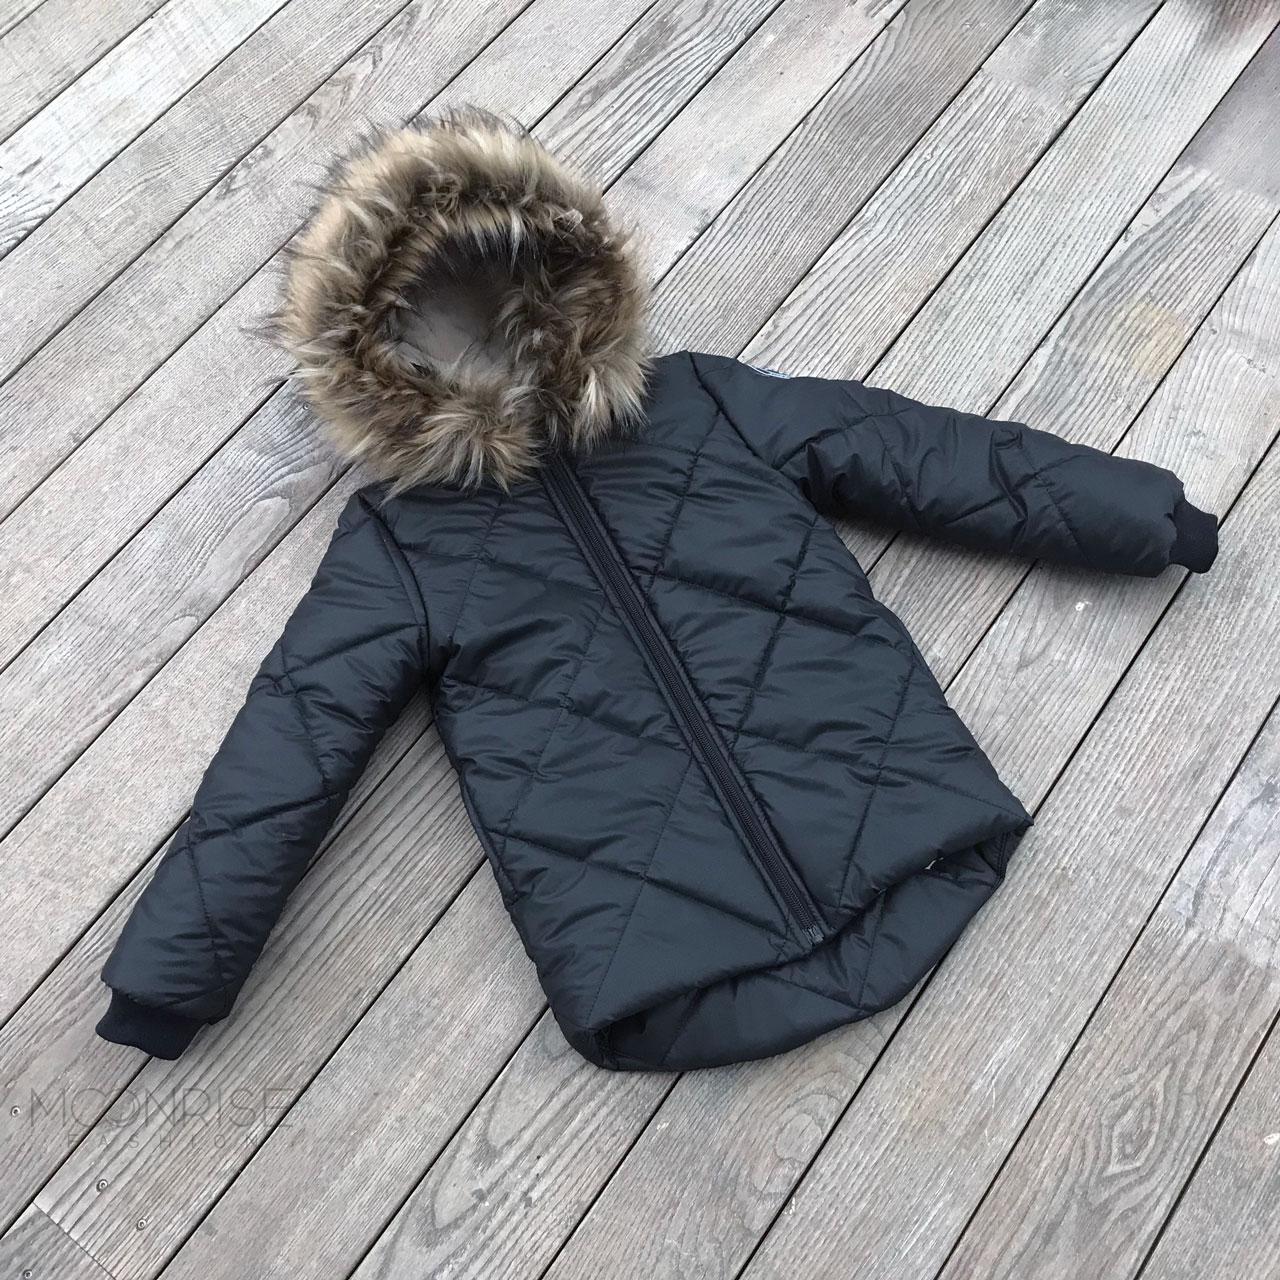 Detská zimná bunda - black "koženkový" efekt 104, 